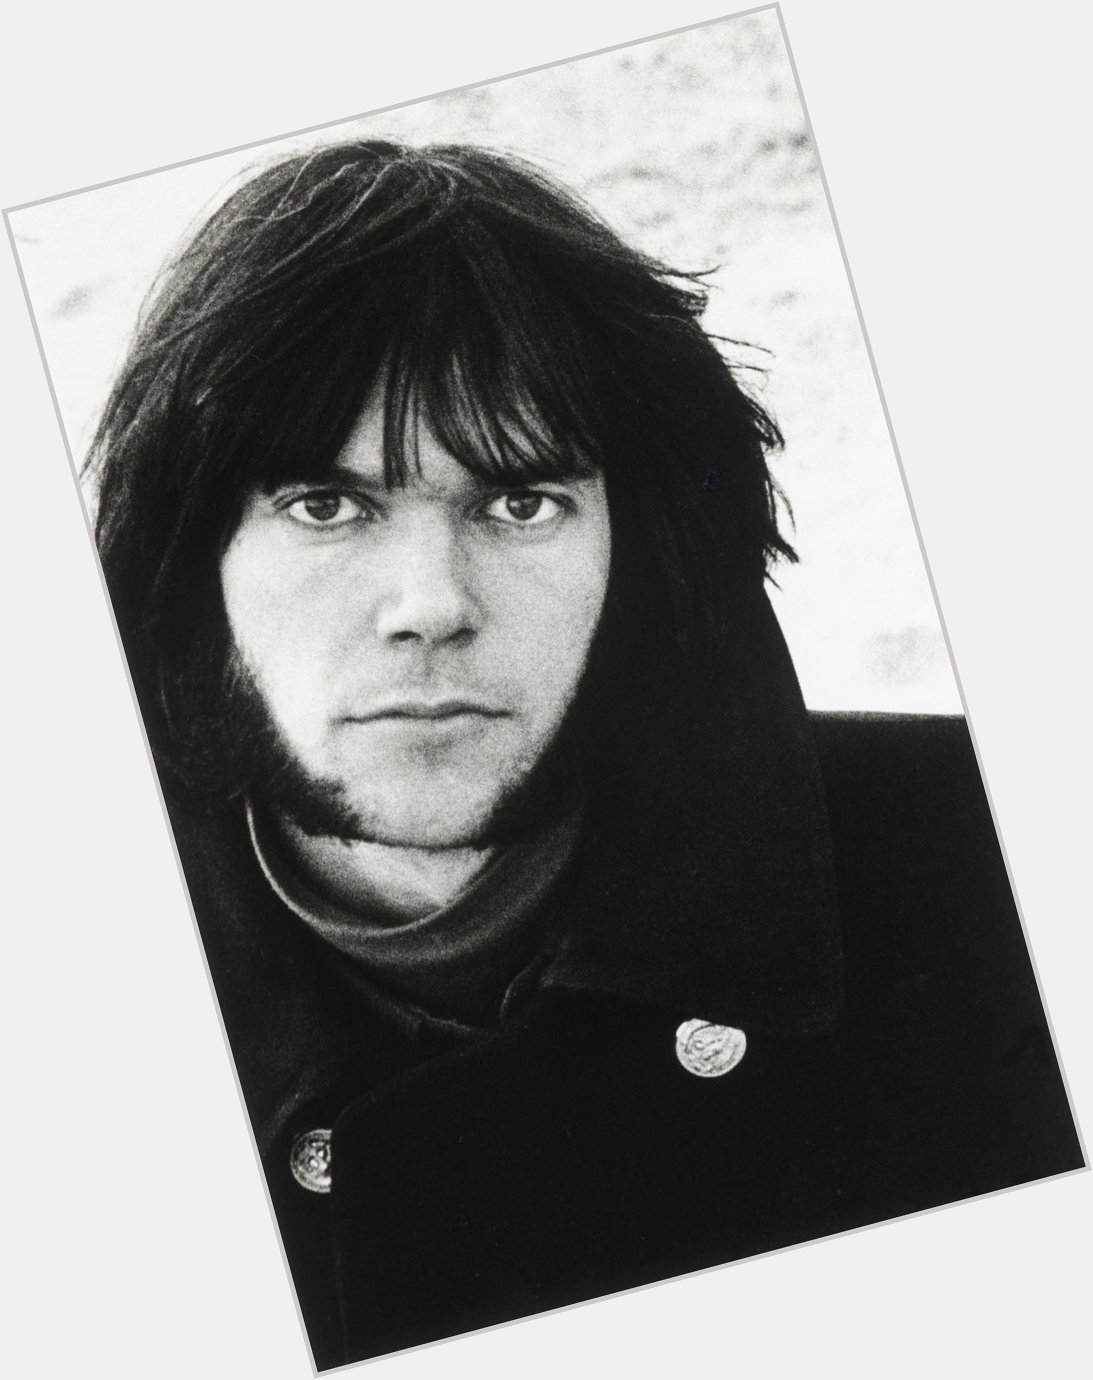 Happy Birthday to Neil Young, born Nov 12th 1945 